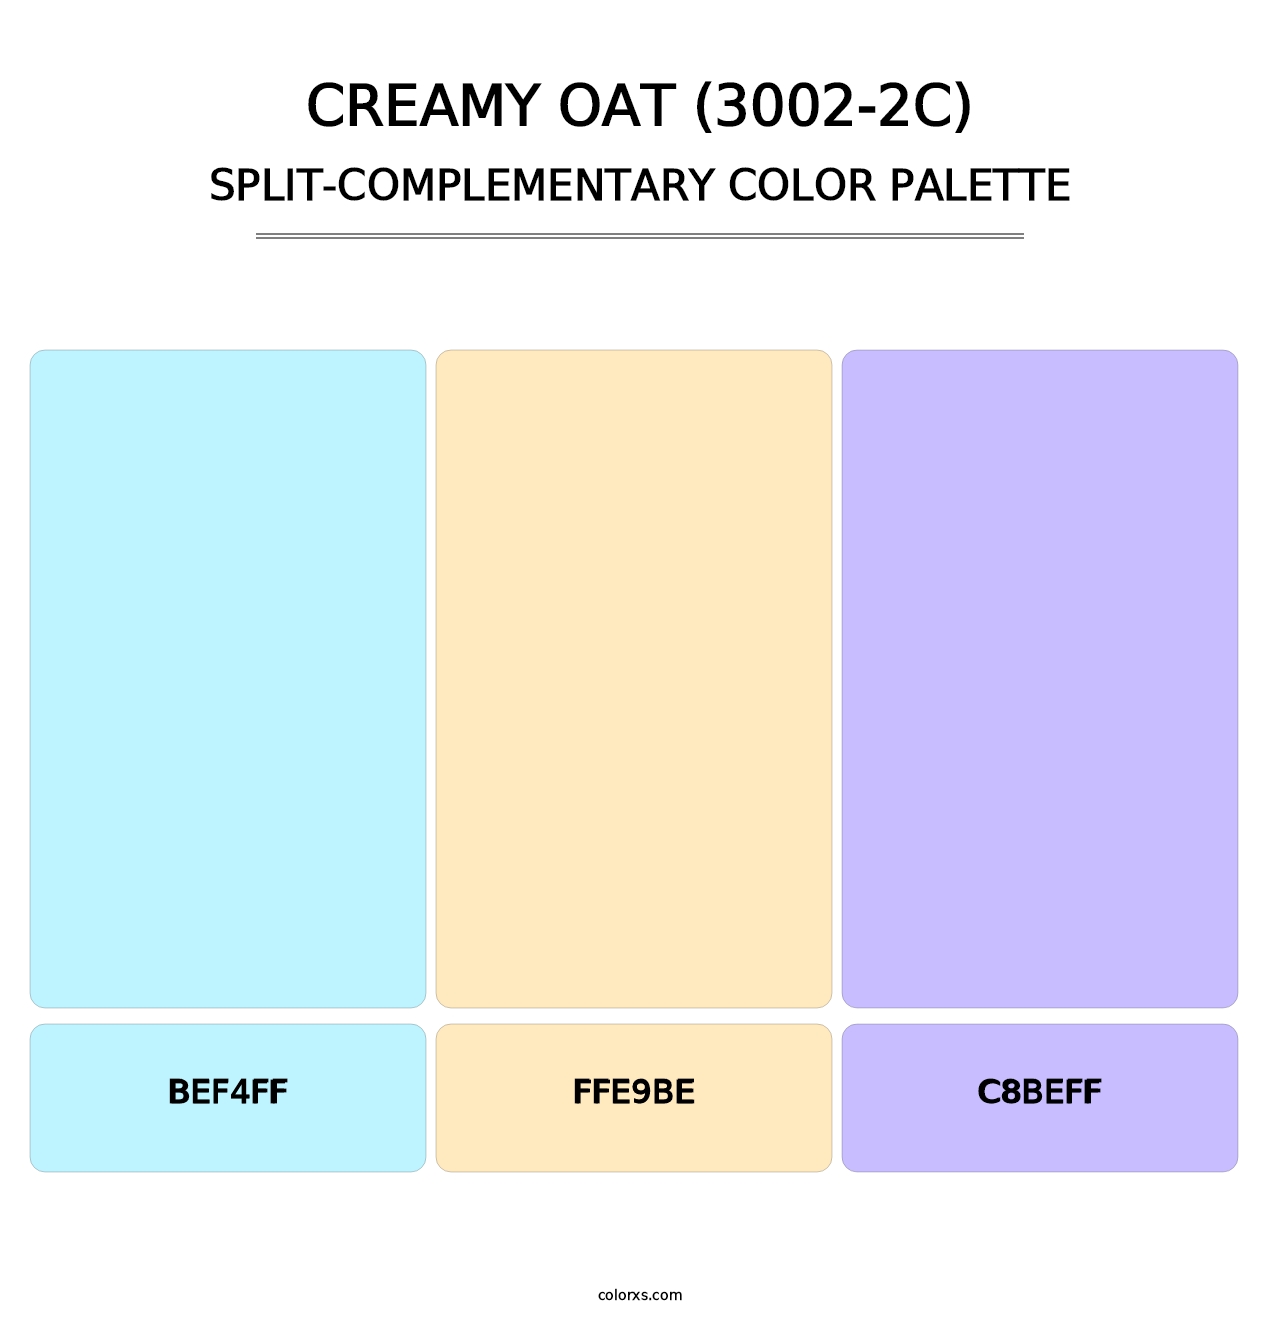 Creamy Oat (3002-2C) - Split-Complementary Color Palette